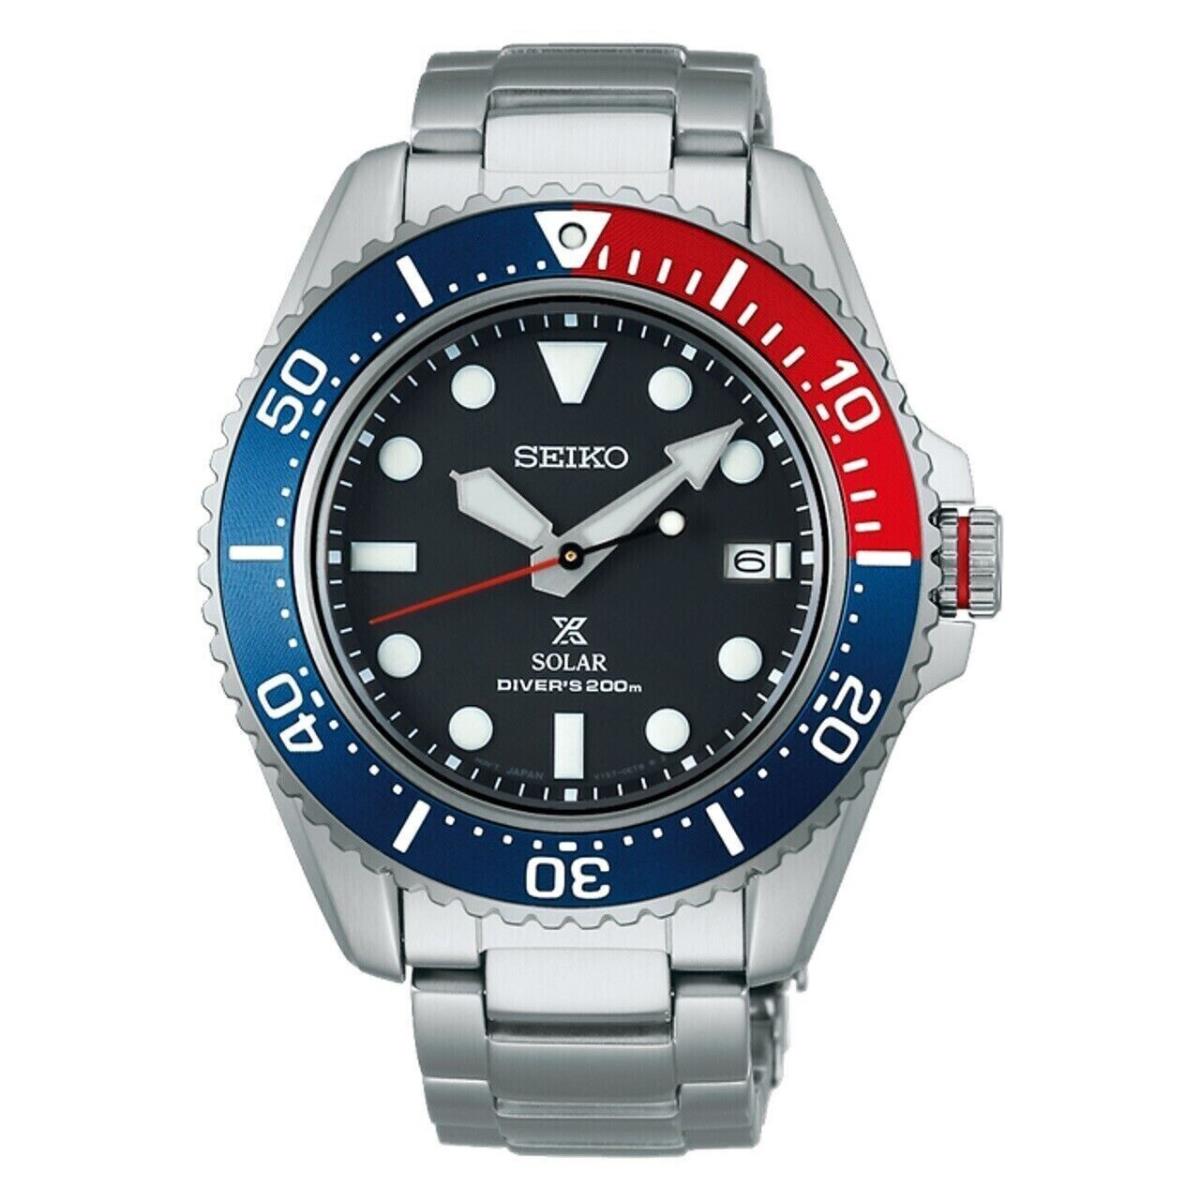 Seiko Men s Solar Diver Black Dial Pepsi Steel Bracelet Watch SNE591 - Band: Silver